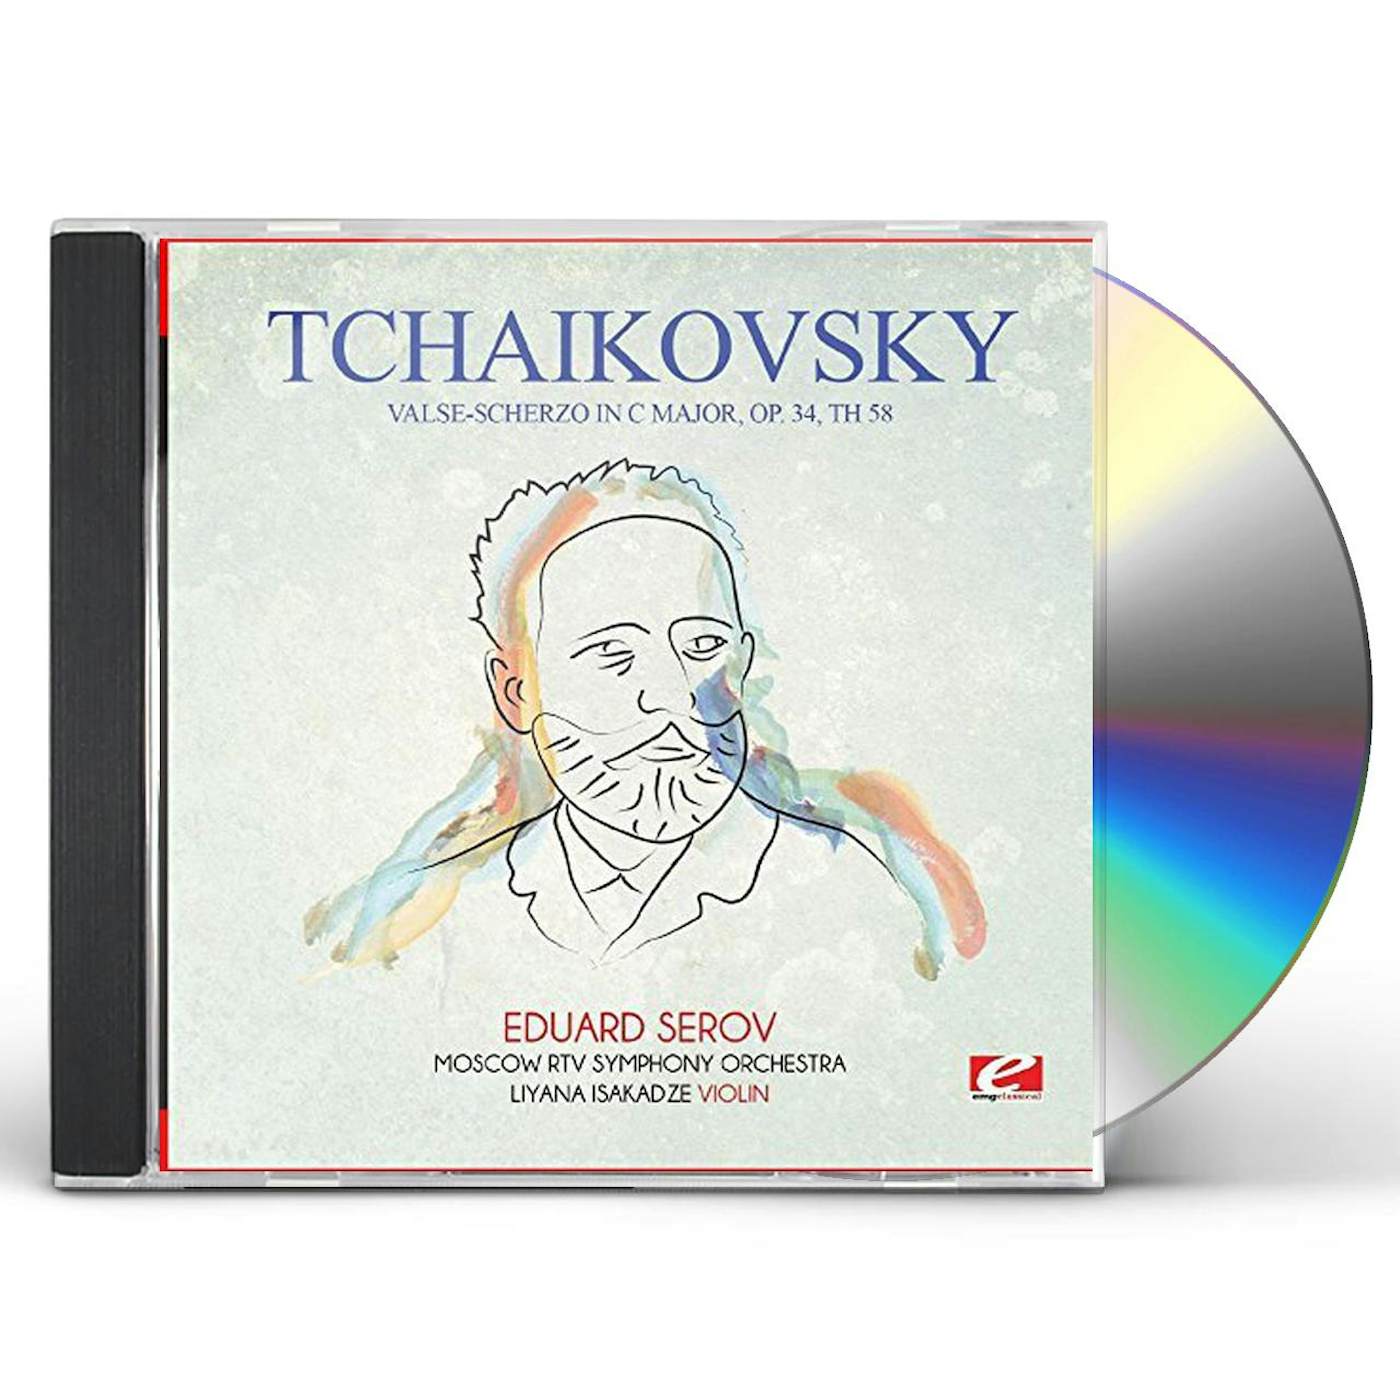 Pyotr Ilyich Tchaikovsky VALSE-SCHERZO IN C MAJOR OP. 34 TH 58 CD